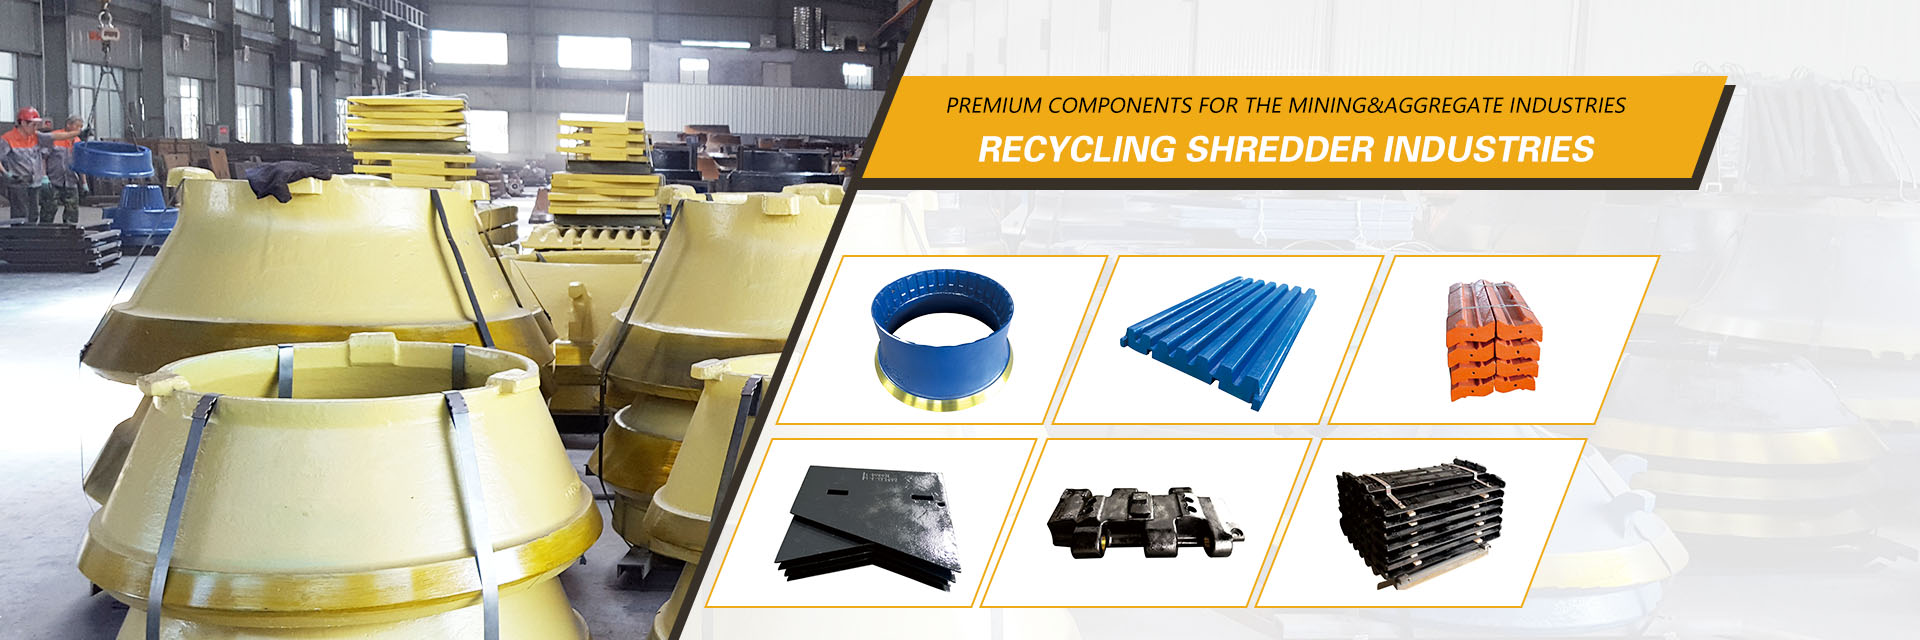 Recycling Shredder Industries